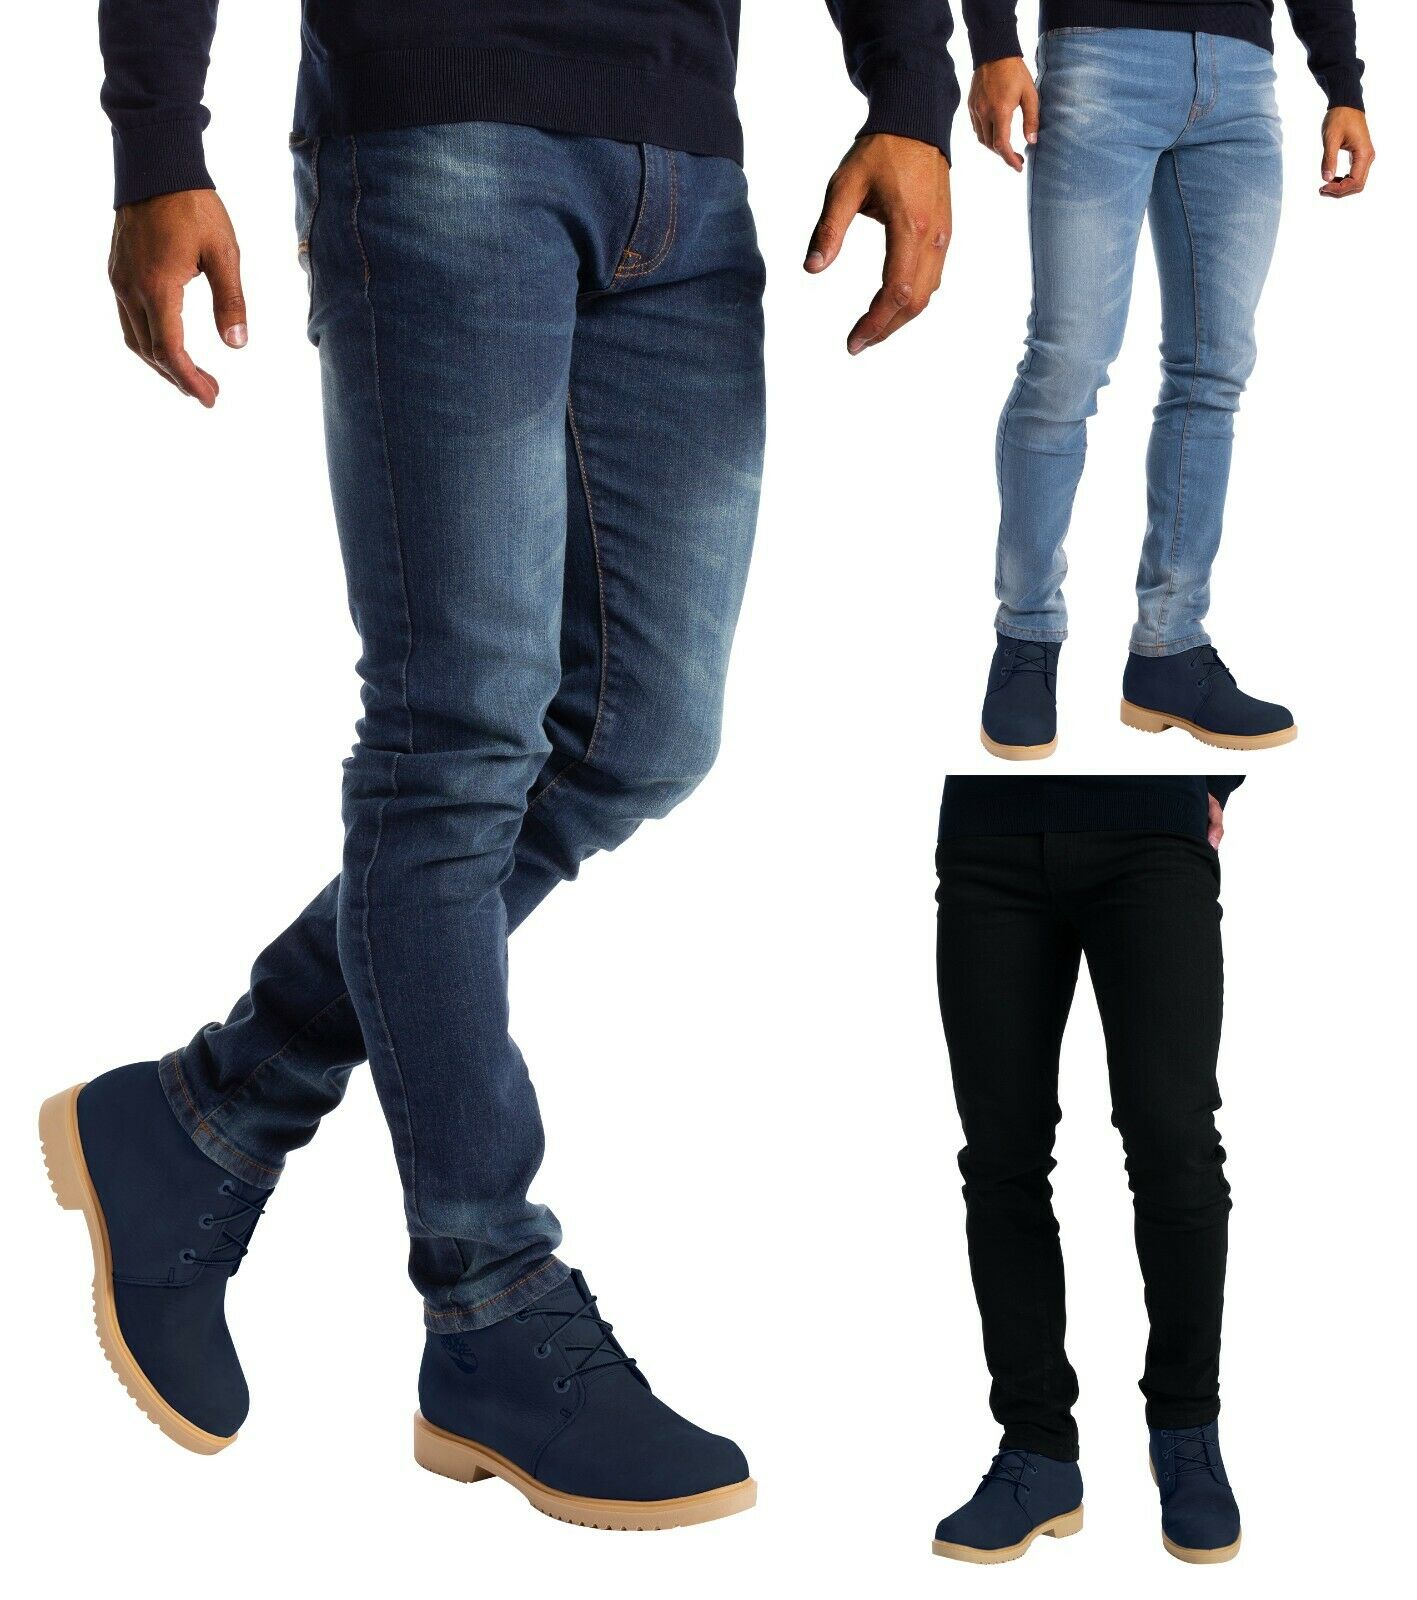 Alamo Men's Skinny Stretch Comfy Denim Jeans Pants